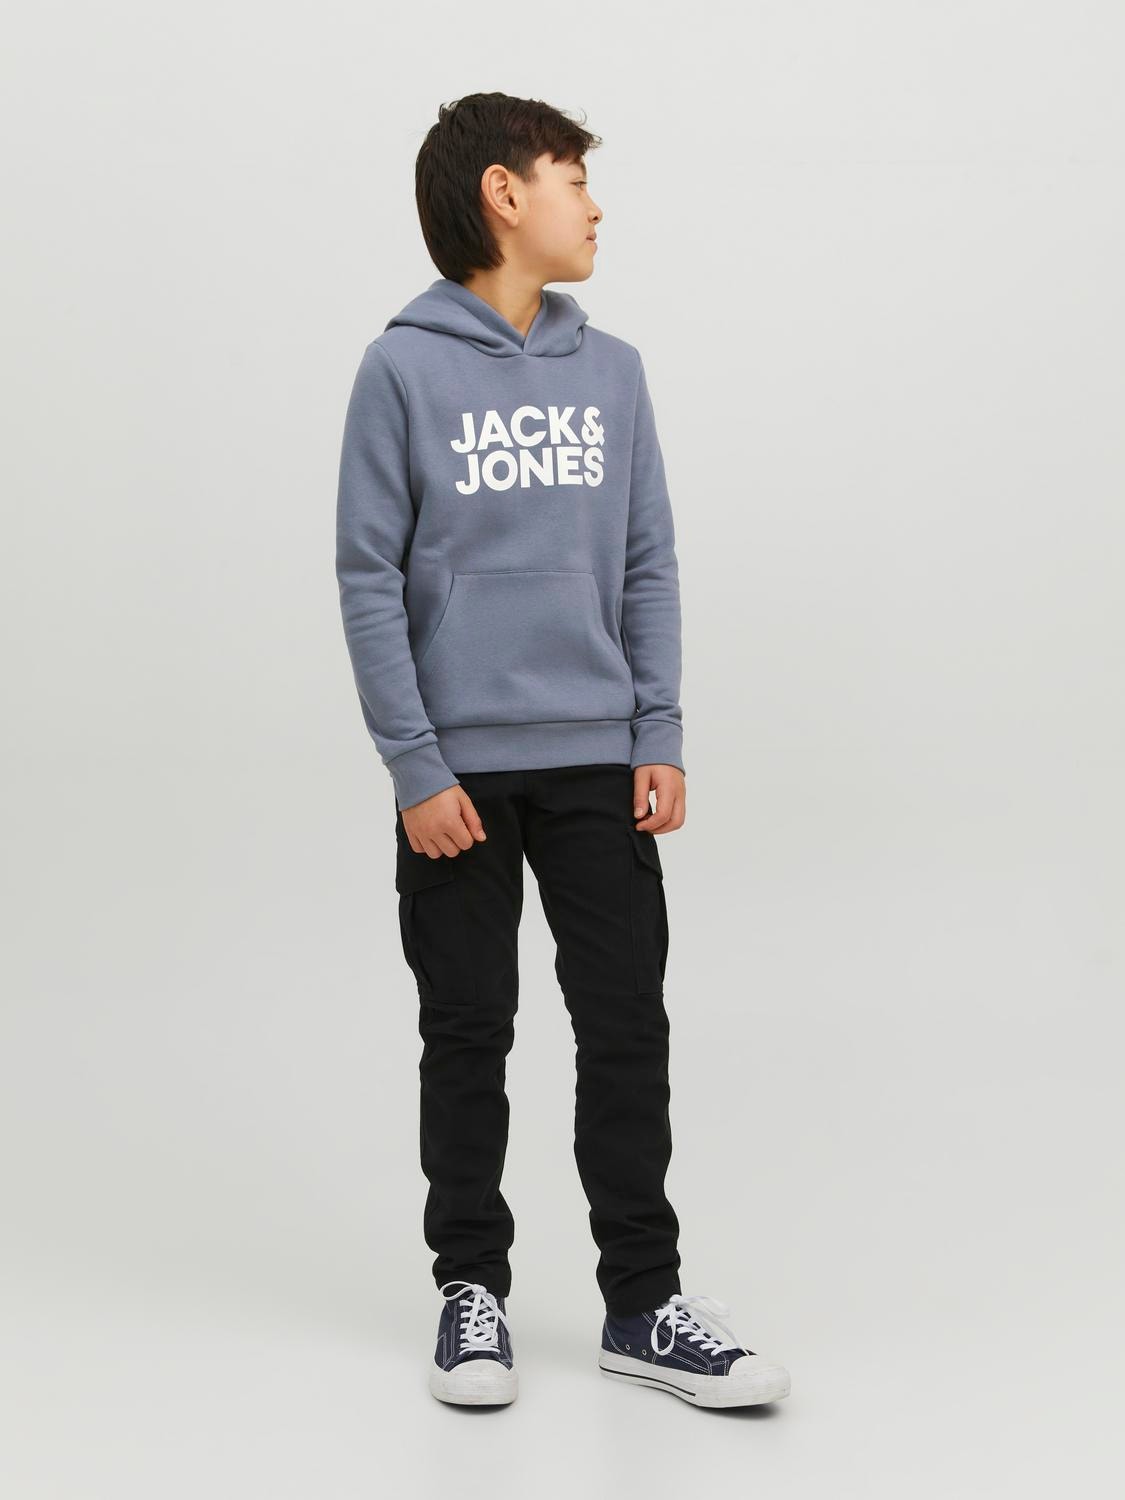 Jack & Jones Logo Hoodie For boys -Flint Stone - 12152841